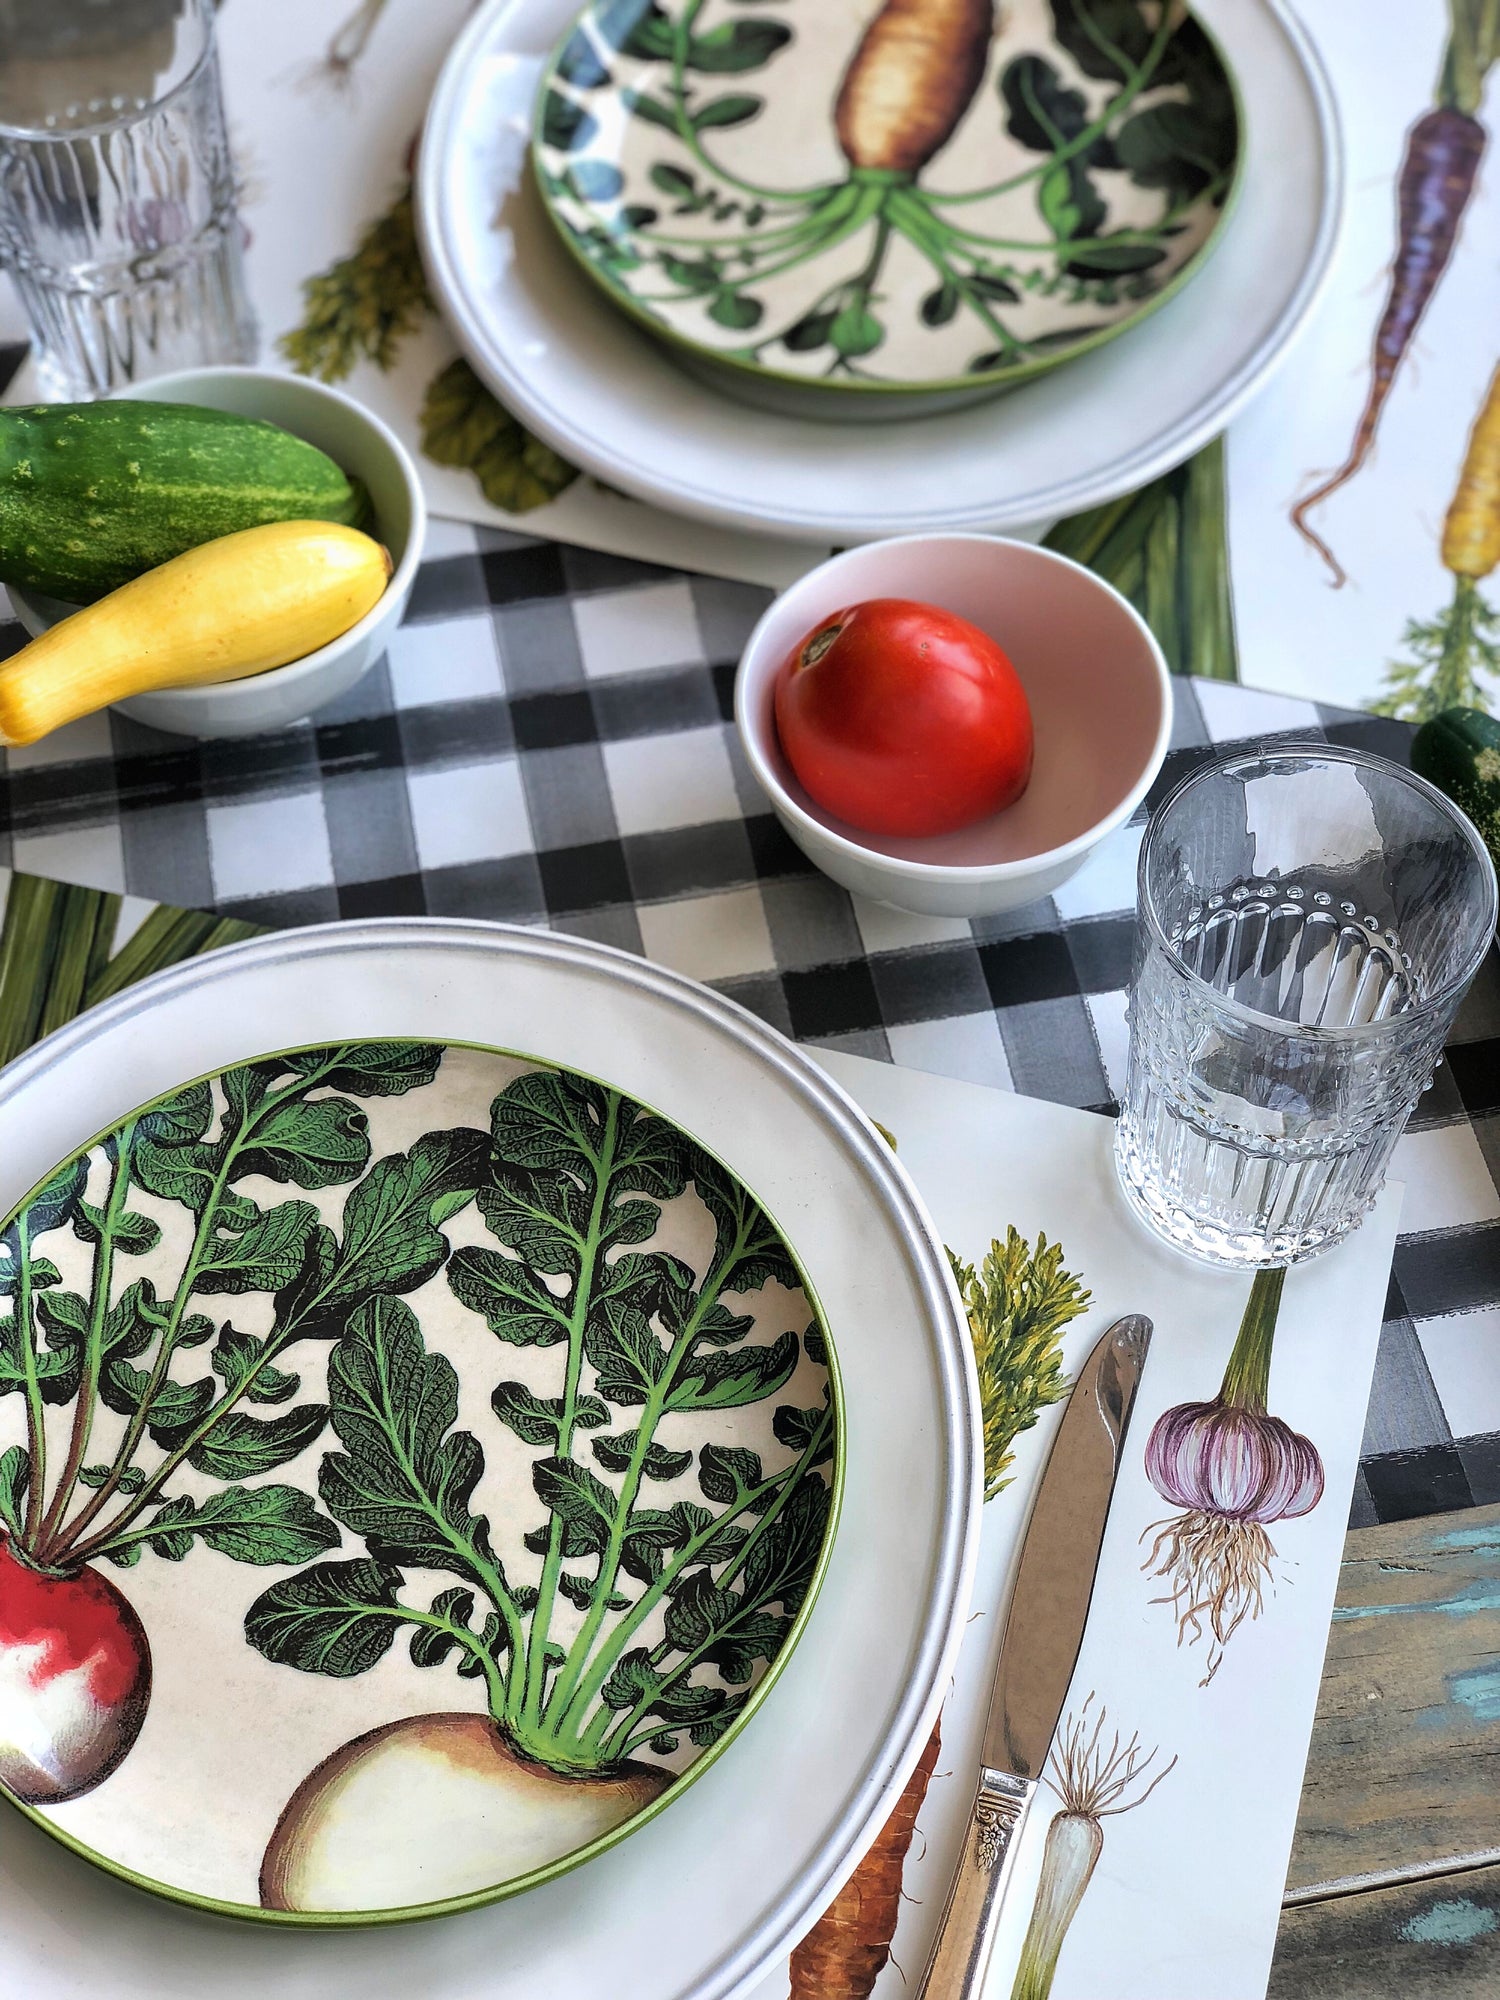 The Black Painted Check Runner under an elegant vegetable-themed table setting.